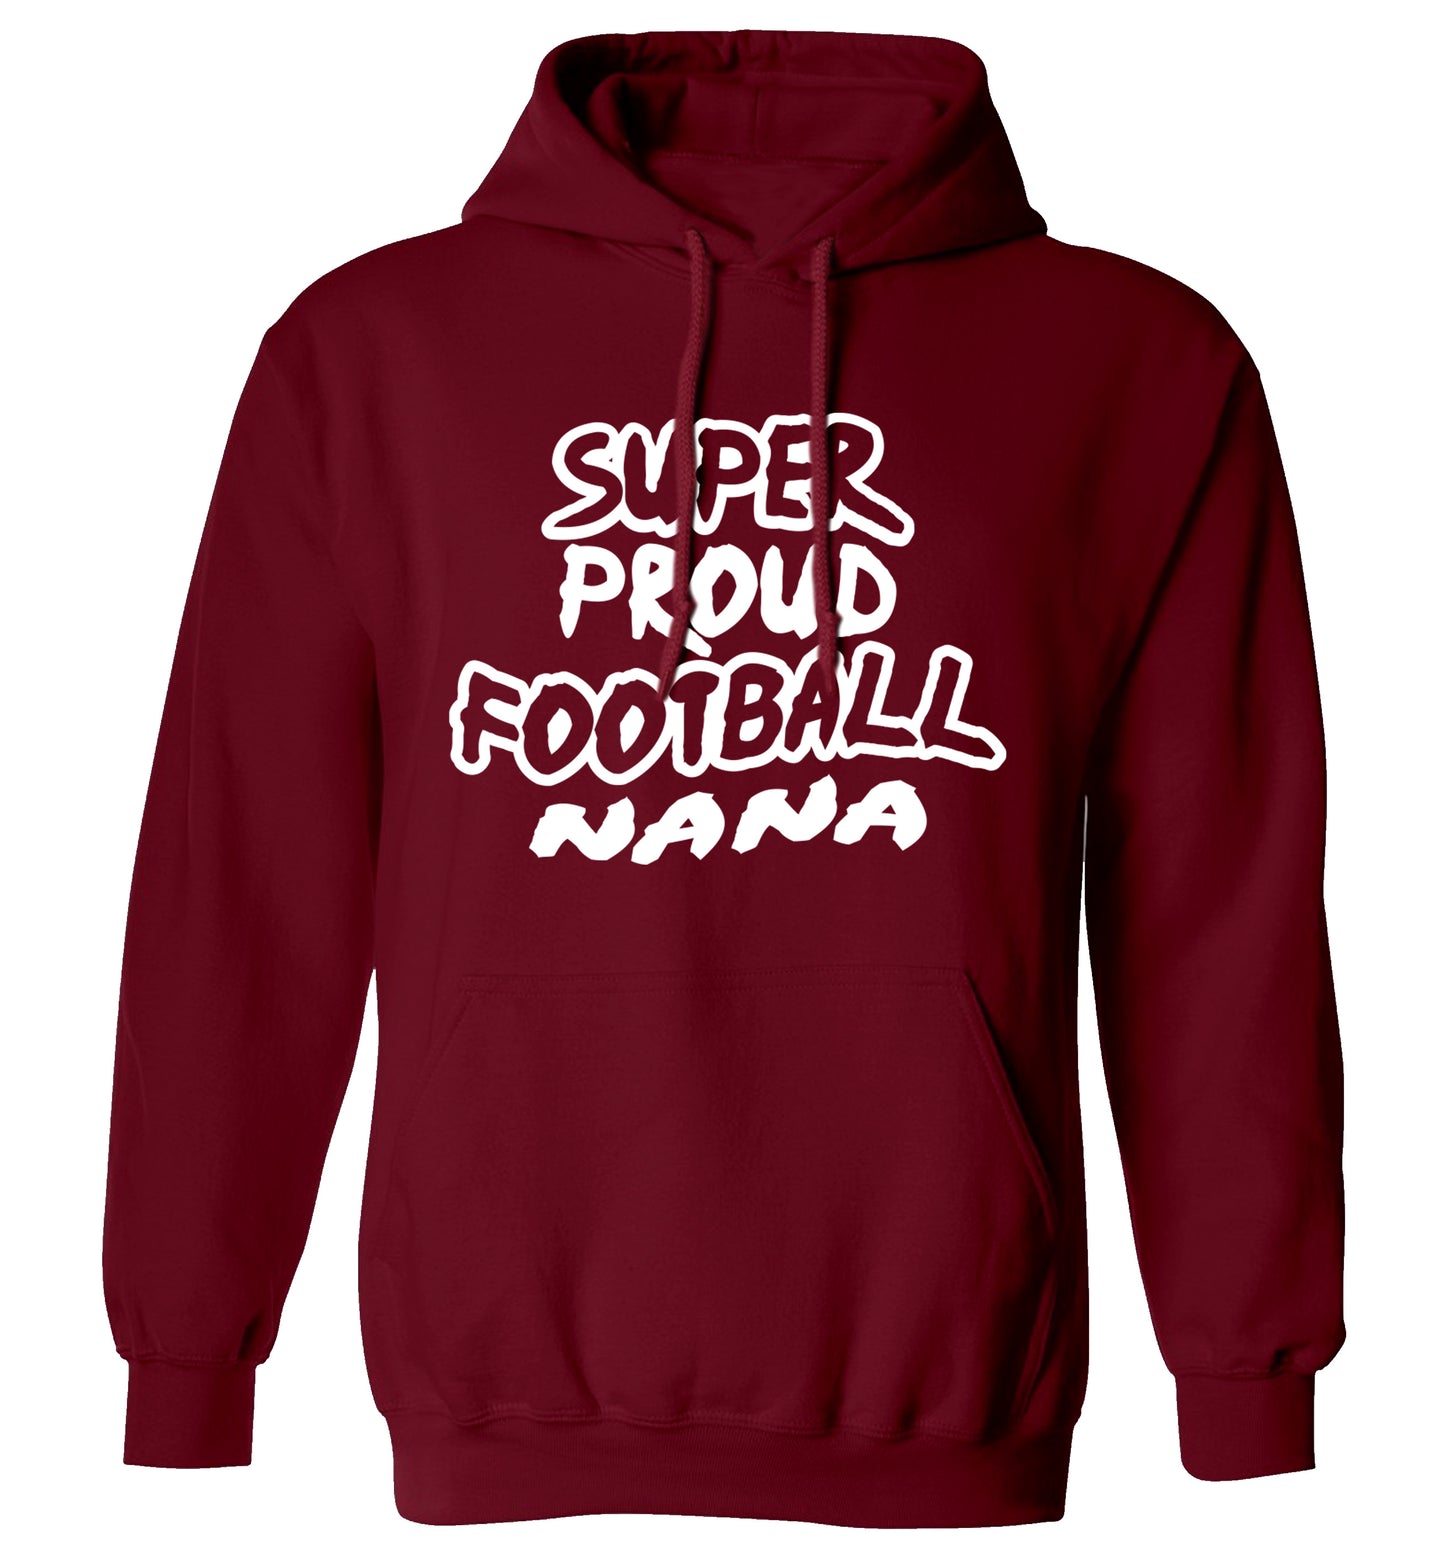 Super proud football nana adults unisexmaroon hoodie 2XL